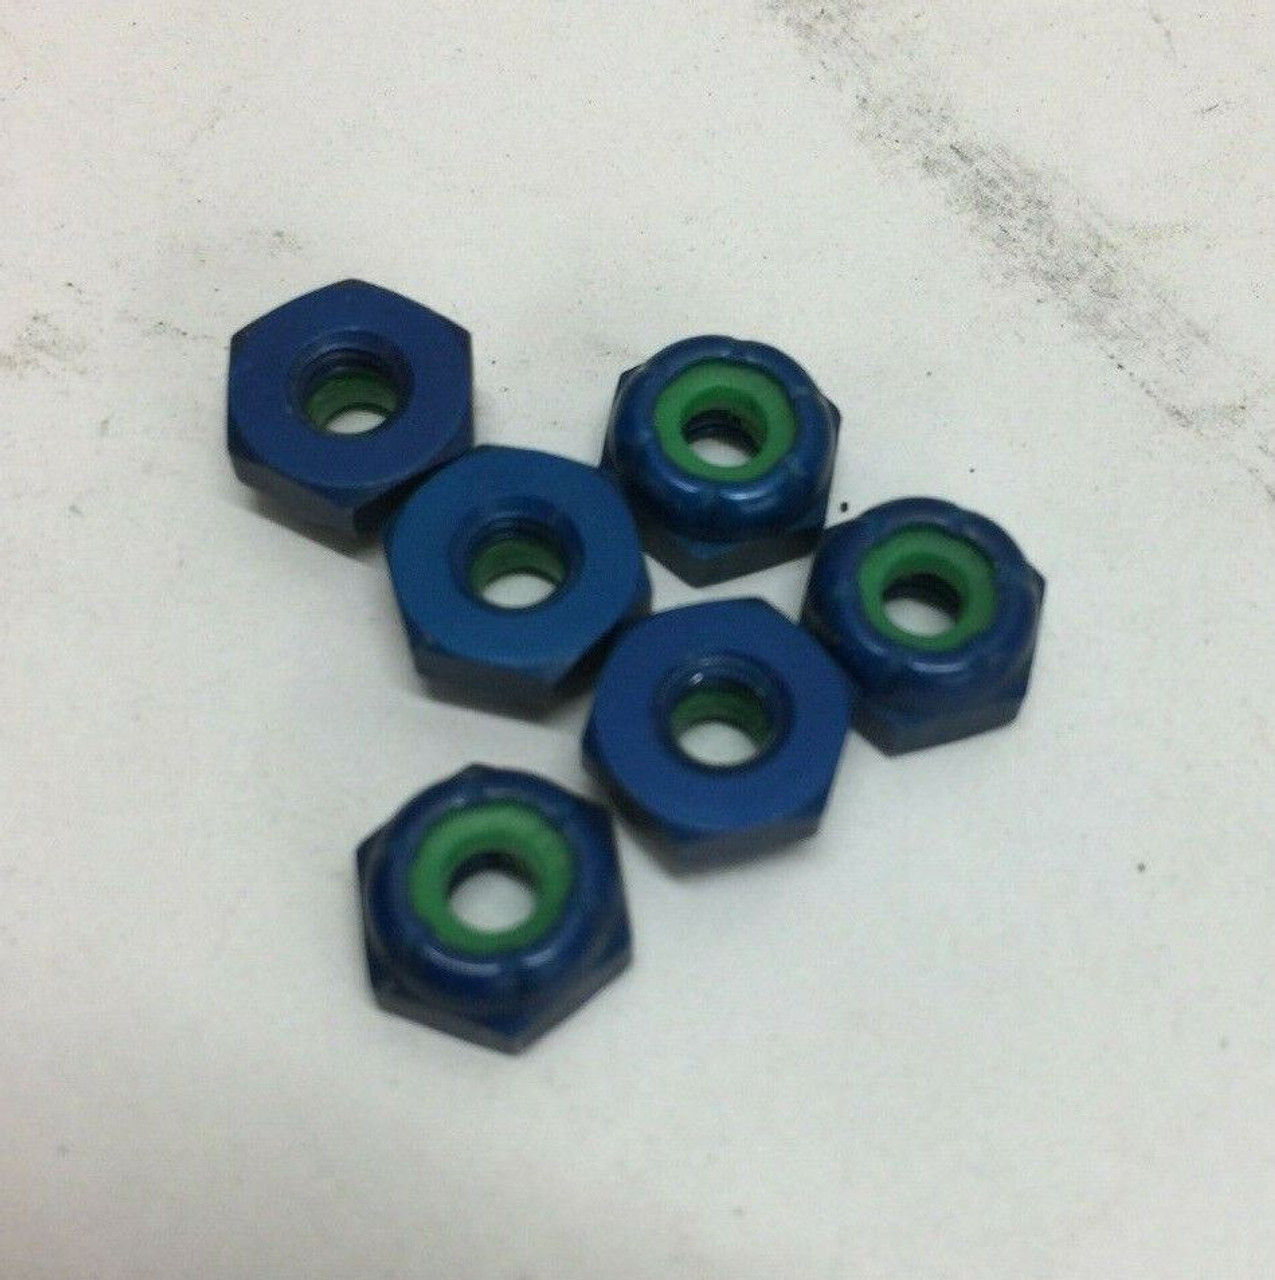 Hexagon Self-Locking Nut NTMJ-832 Greer Stop Nut Aluminum Alloy Lot of 10